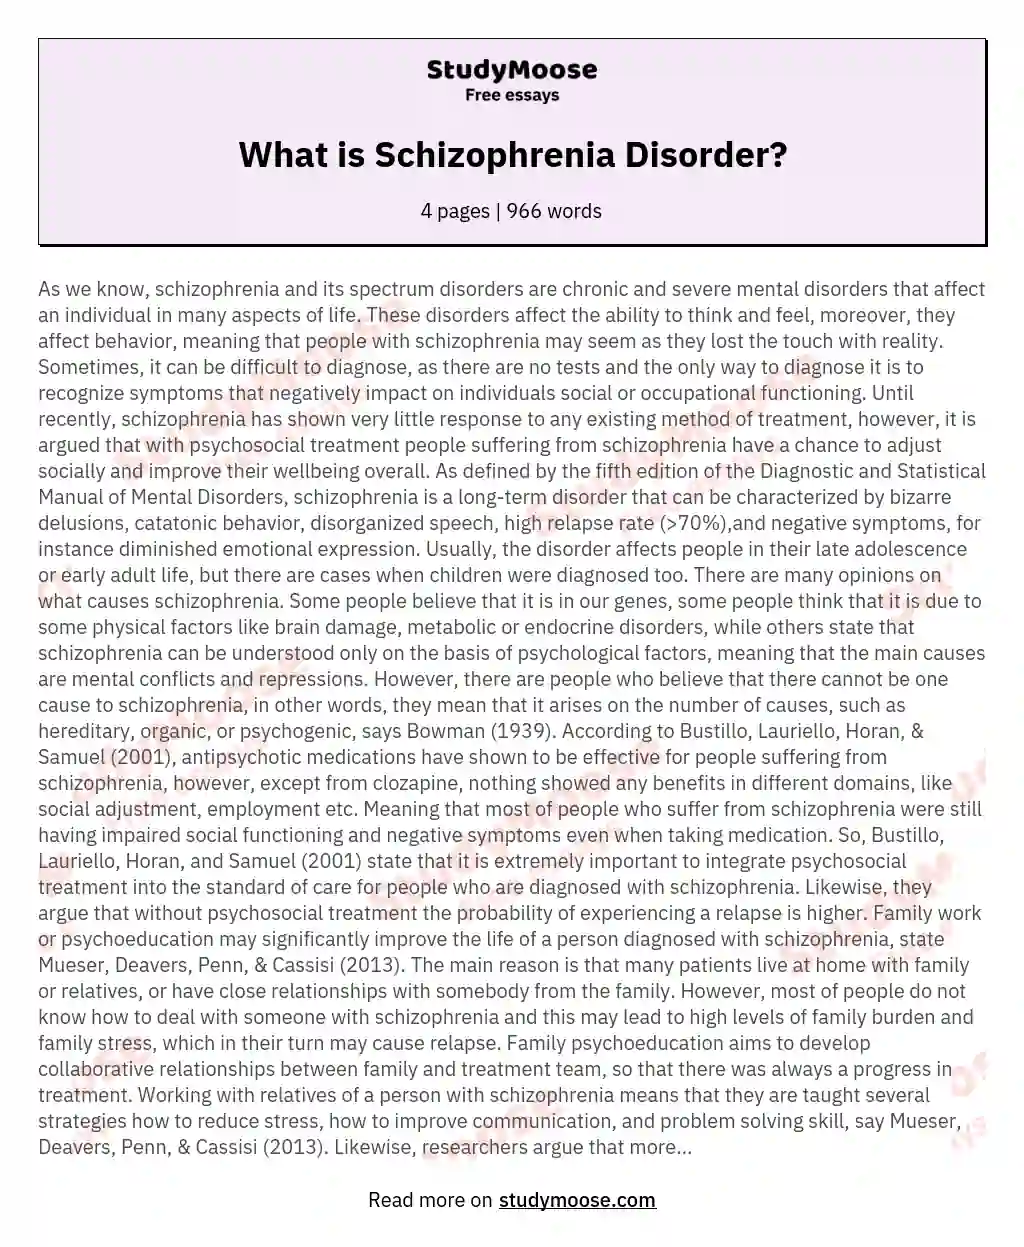 What is Schizophrenia Disorder? essay